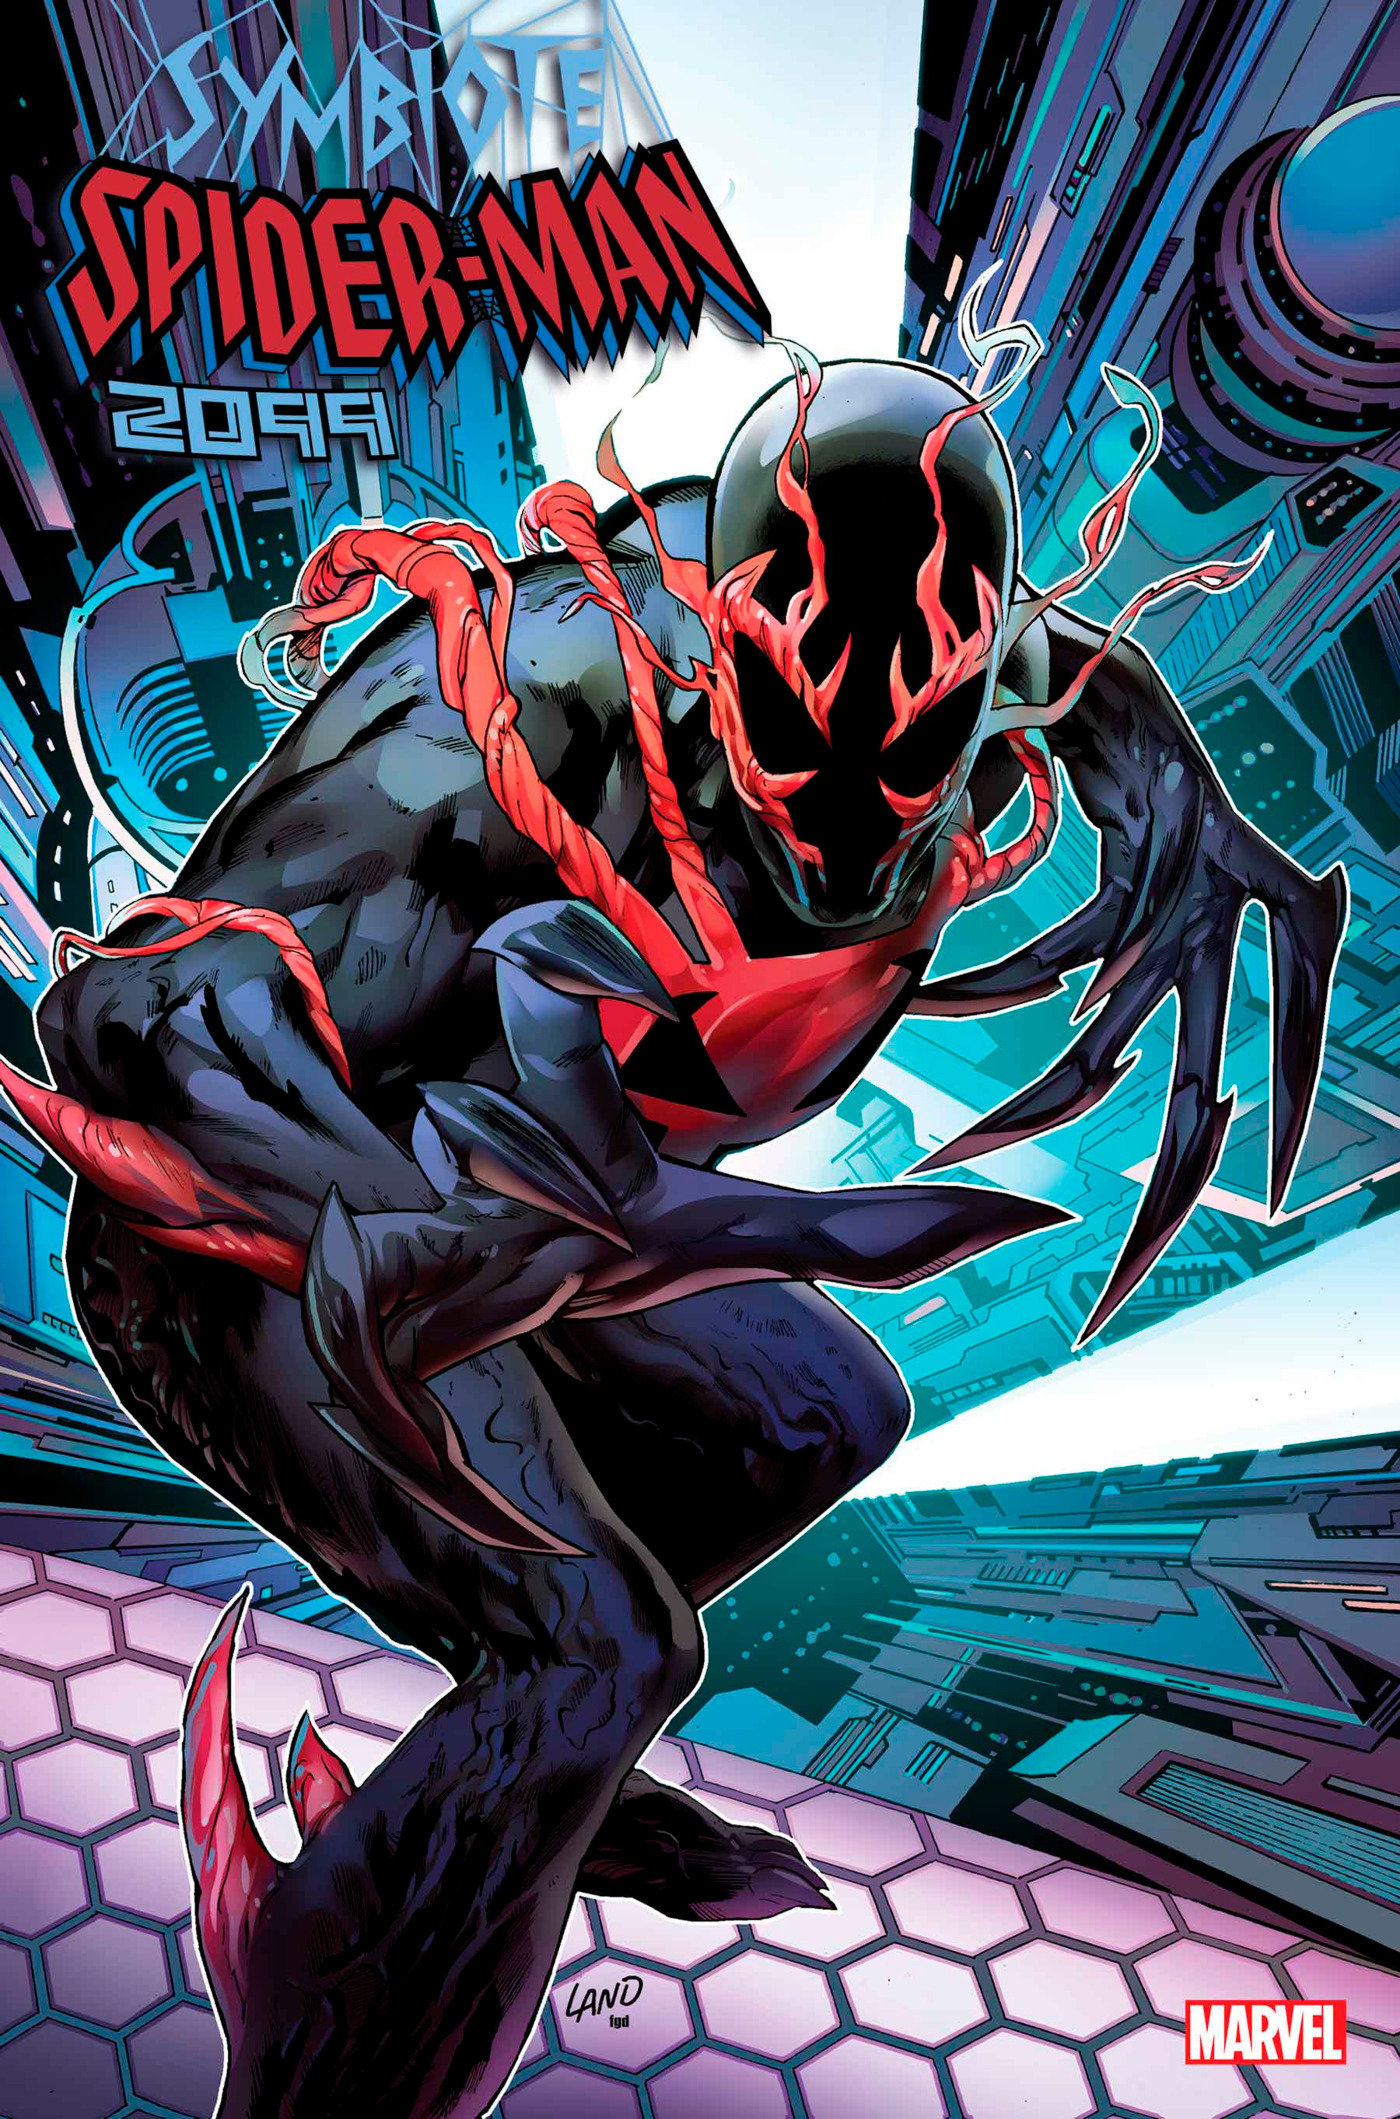 Symbiote Spider-Man 2099 #1 Greg Land Variant (Of 5)